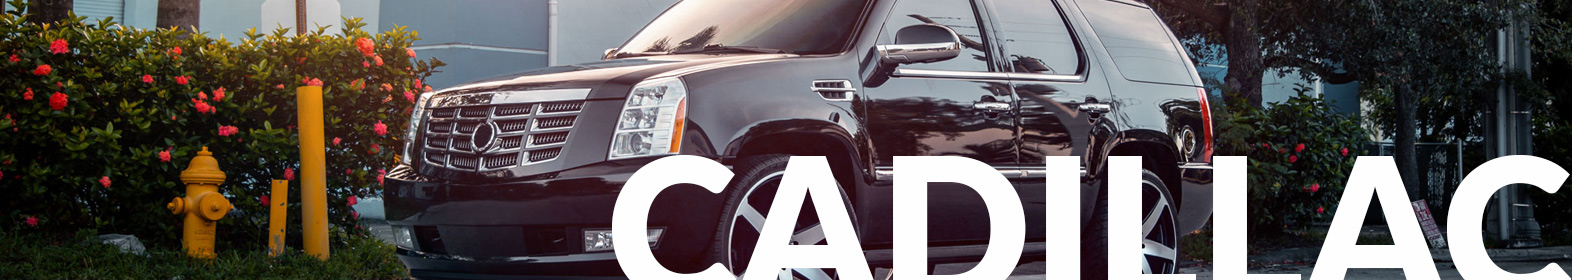 Cadillac Banner | Yates Collision